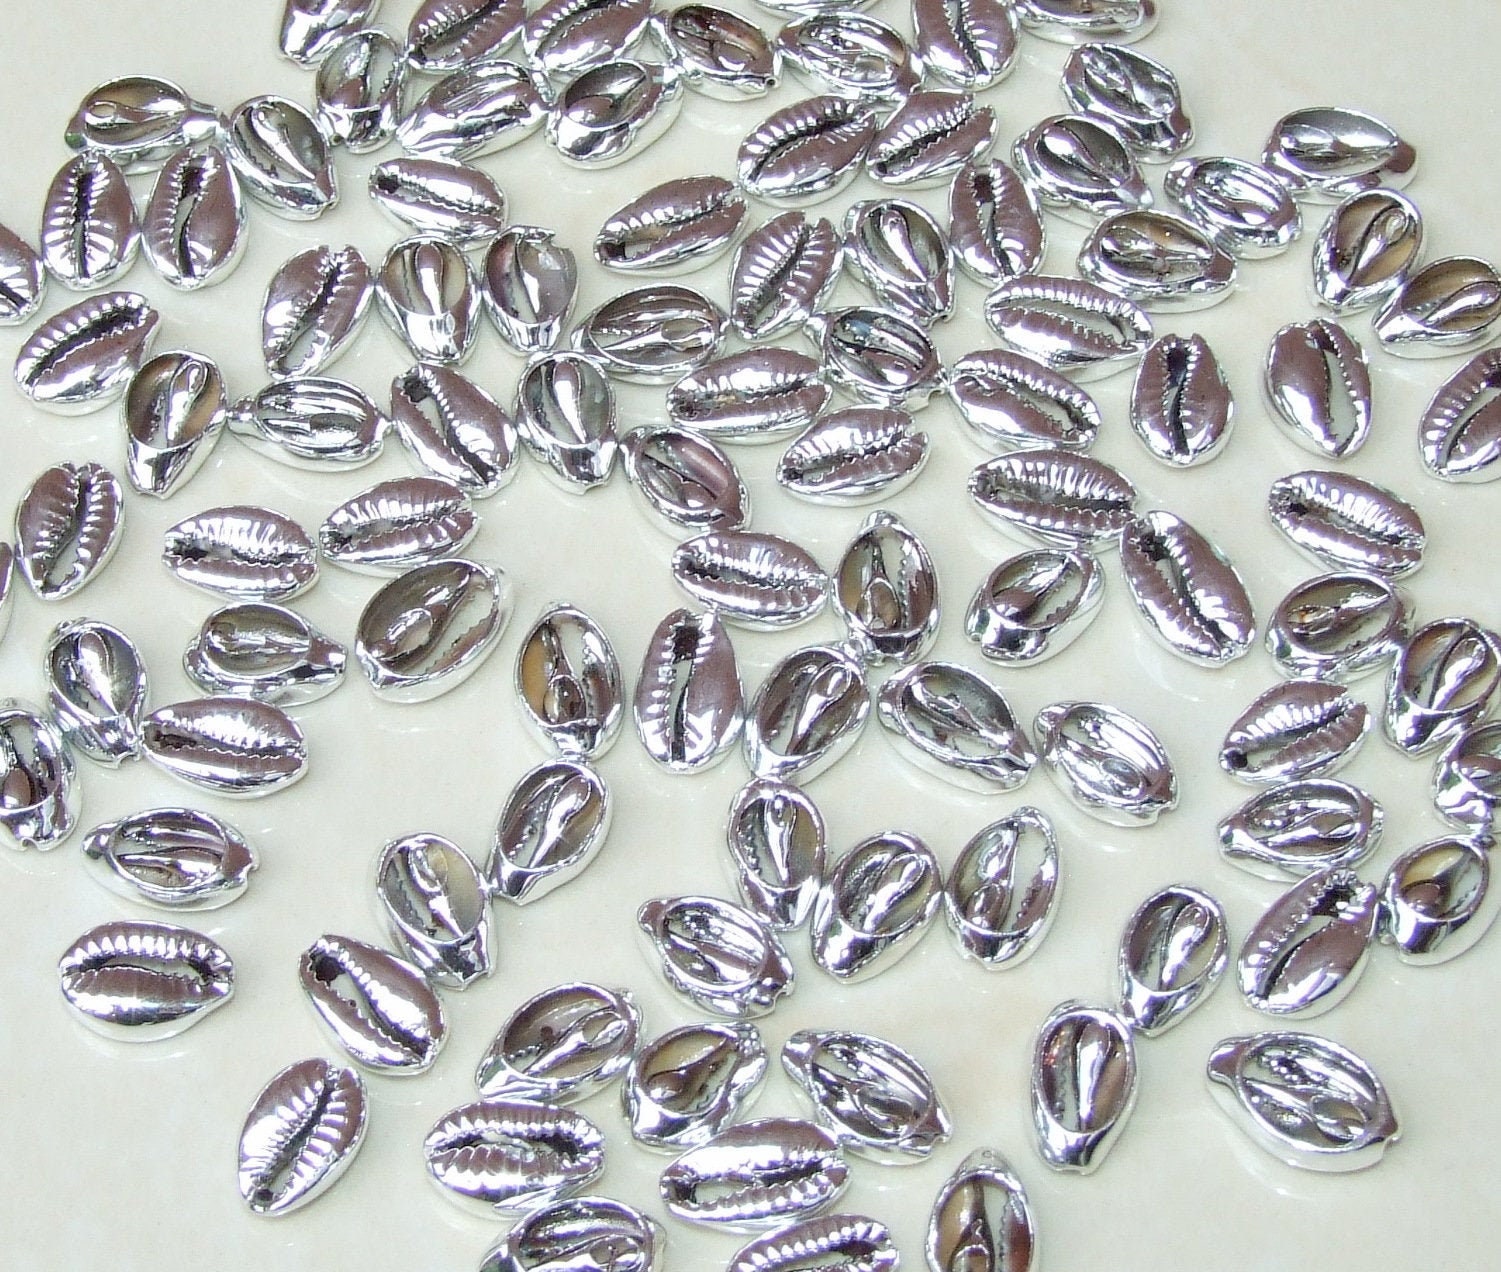 10 Small Silver Plated Cowrie Shell Connector, No Loops, Natural Seashell Pendant - Money Shell, Sea shell - Beach, Pendant, Boho - 13-16mm